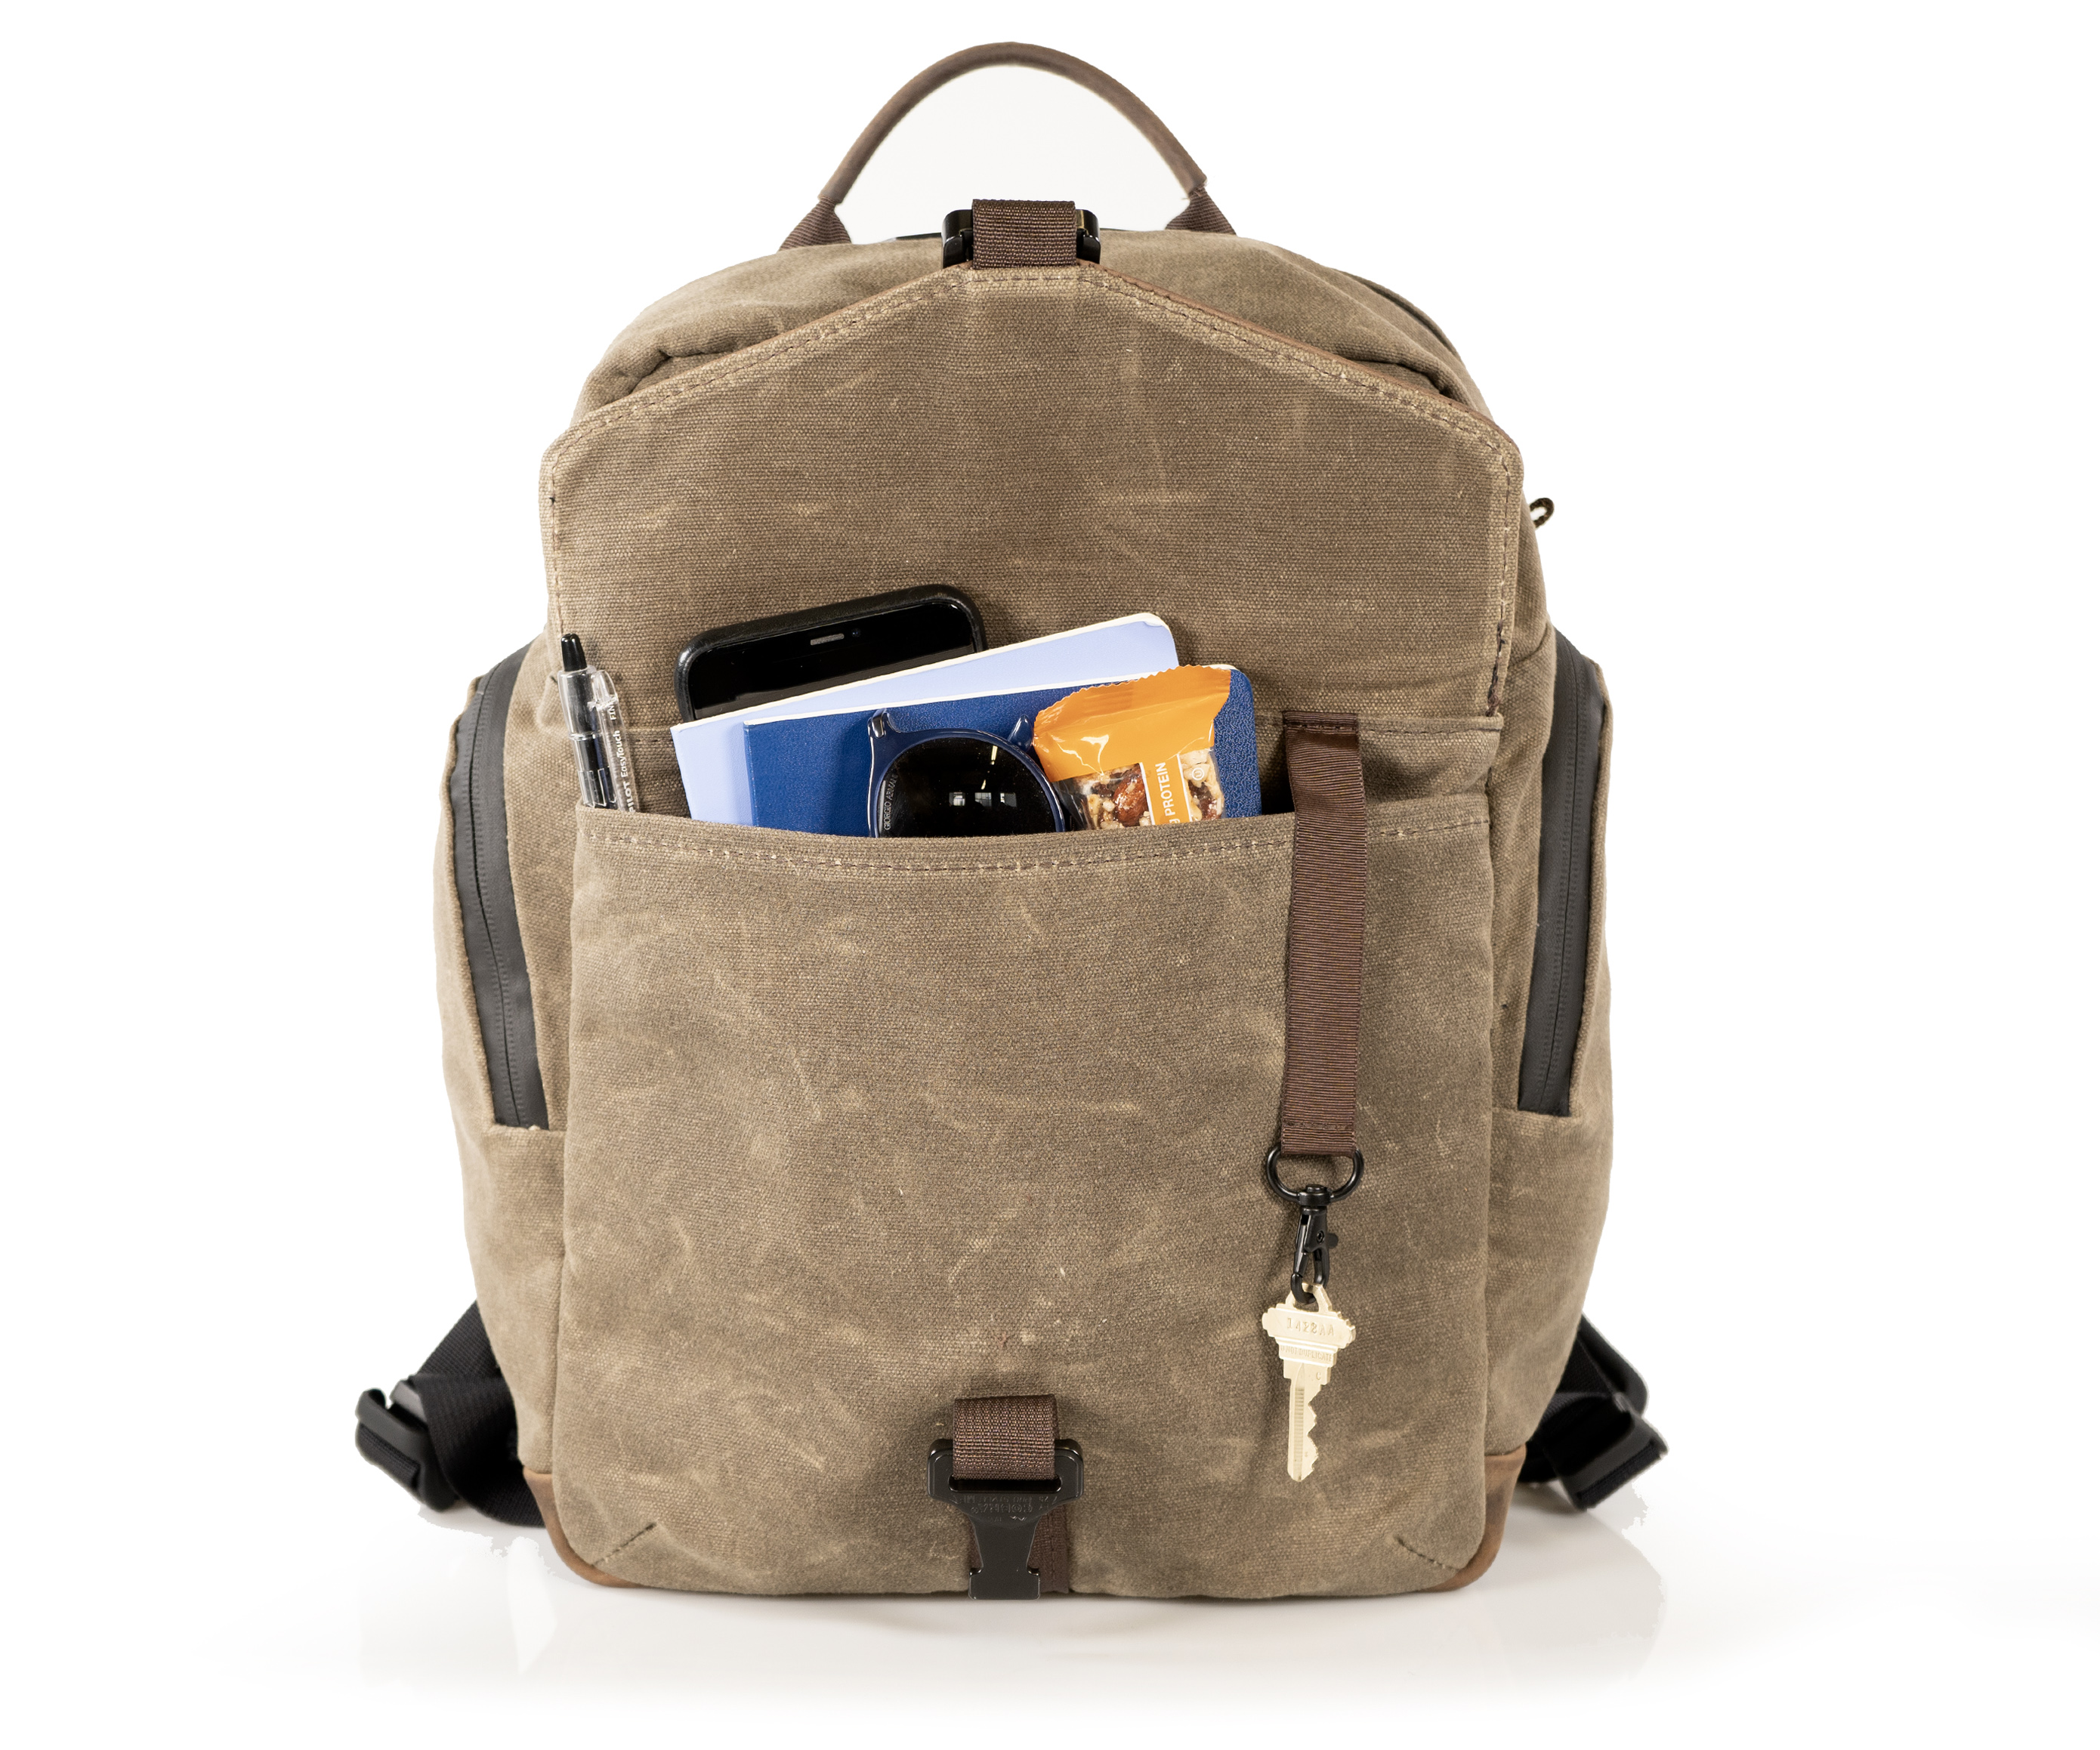 Field Backpack or Sling - front pocket with key hook